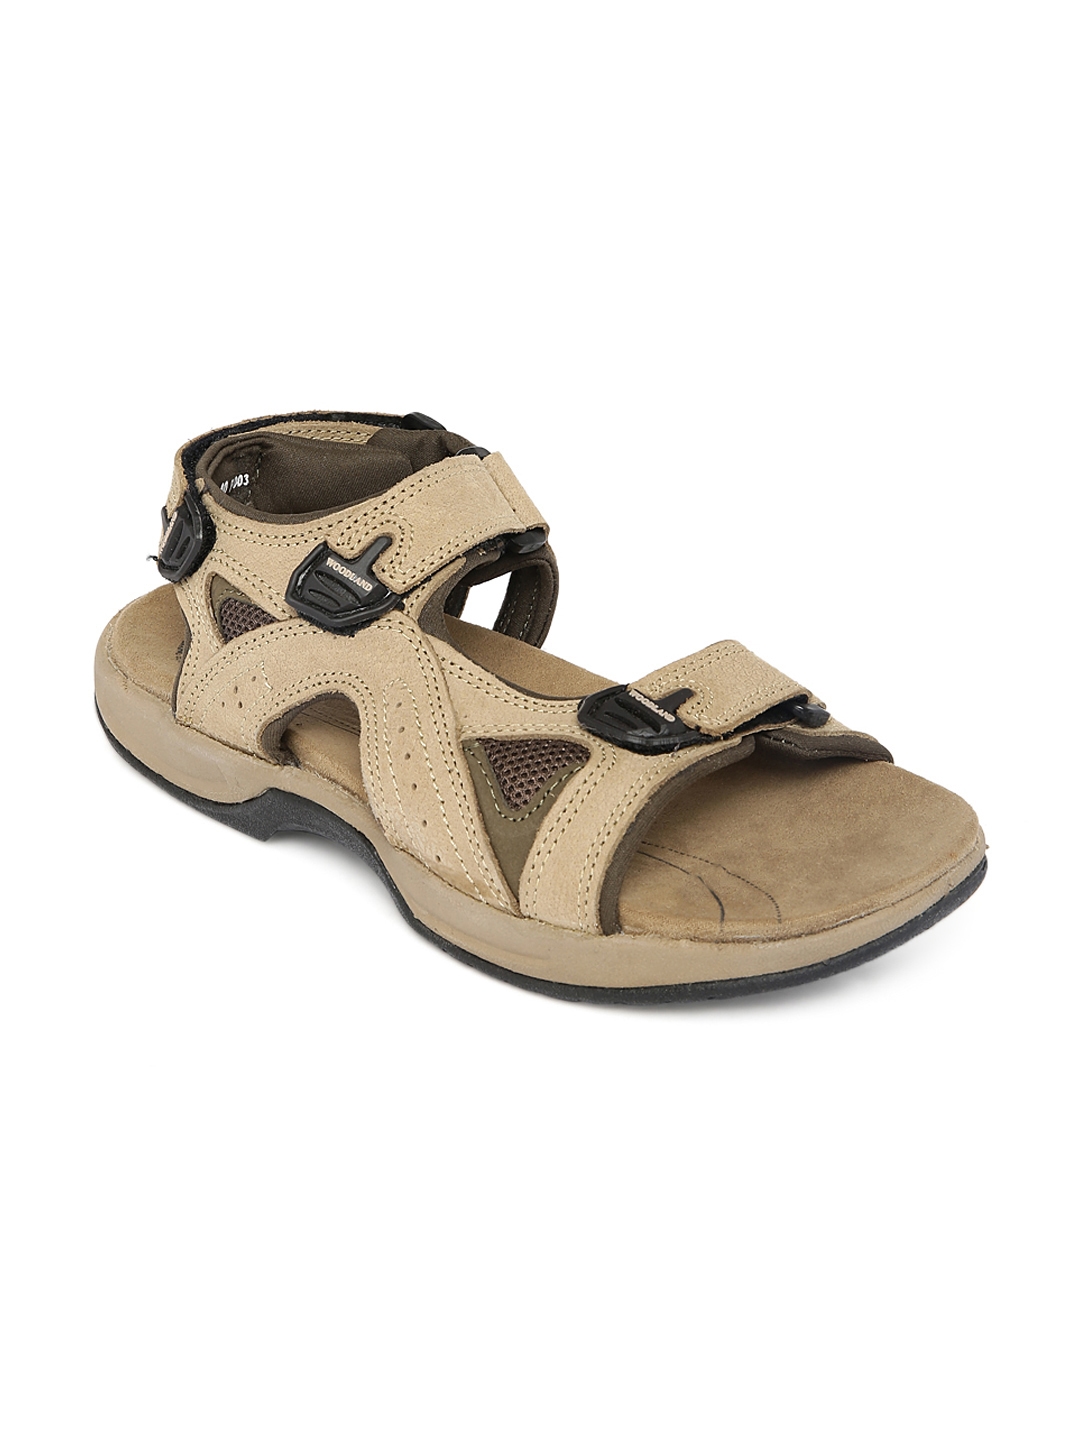 Buy Woodland Men Brown Leather Comfort Sandals - Sandals for Men 6995123 |  Myntra